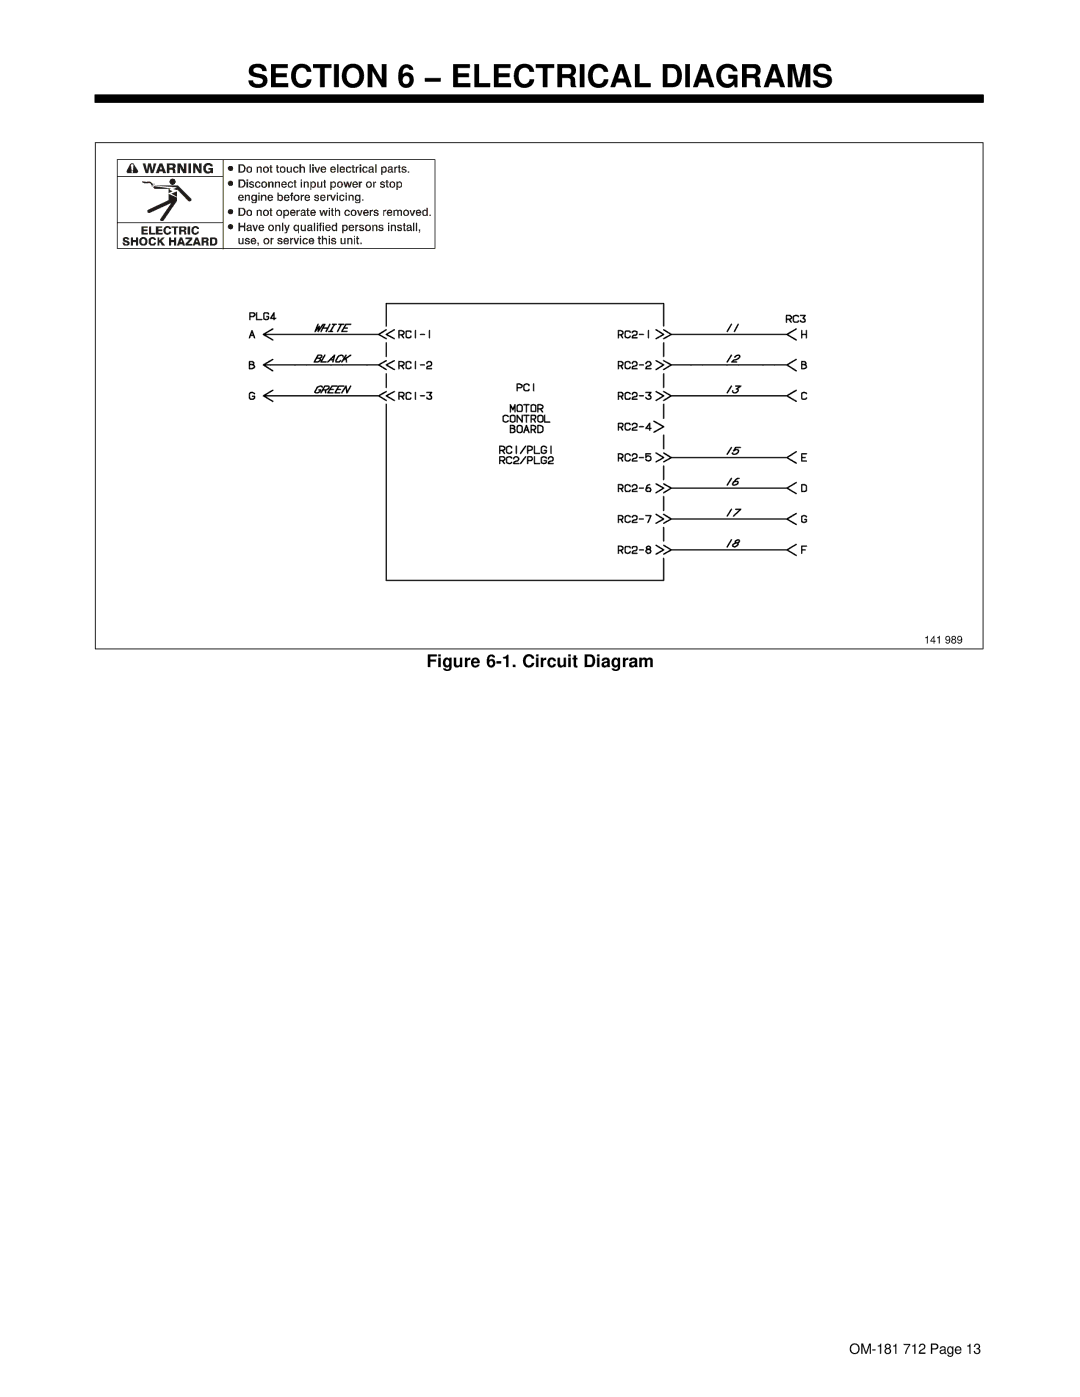 Miller Electric WC-24 manual Electrical Diagrams, Circuit Diagram 